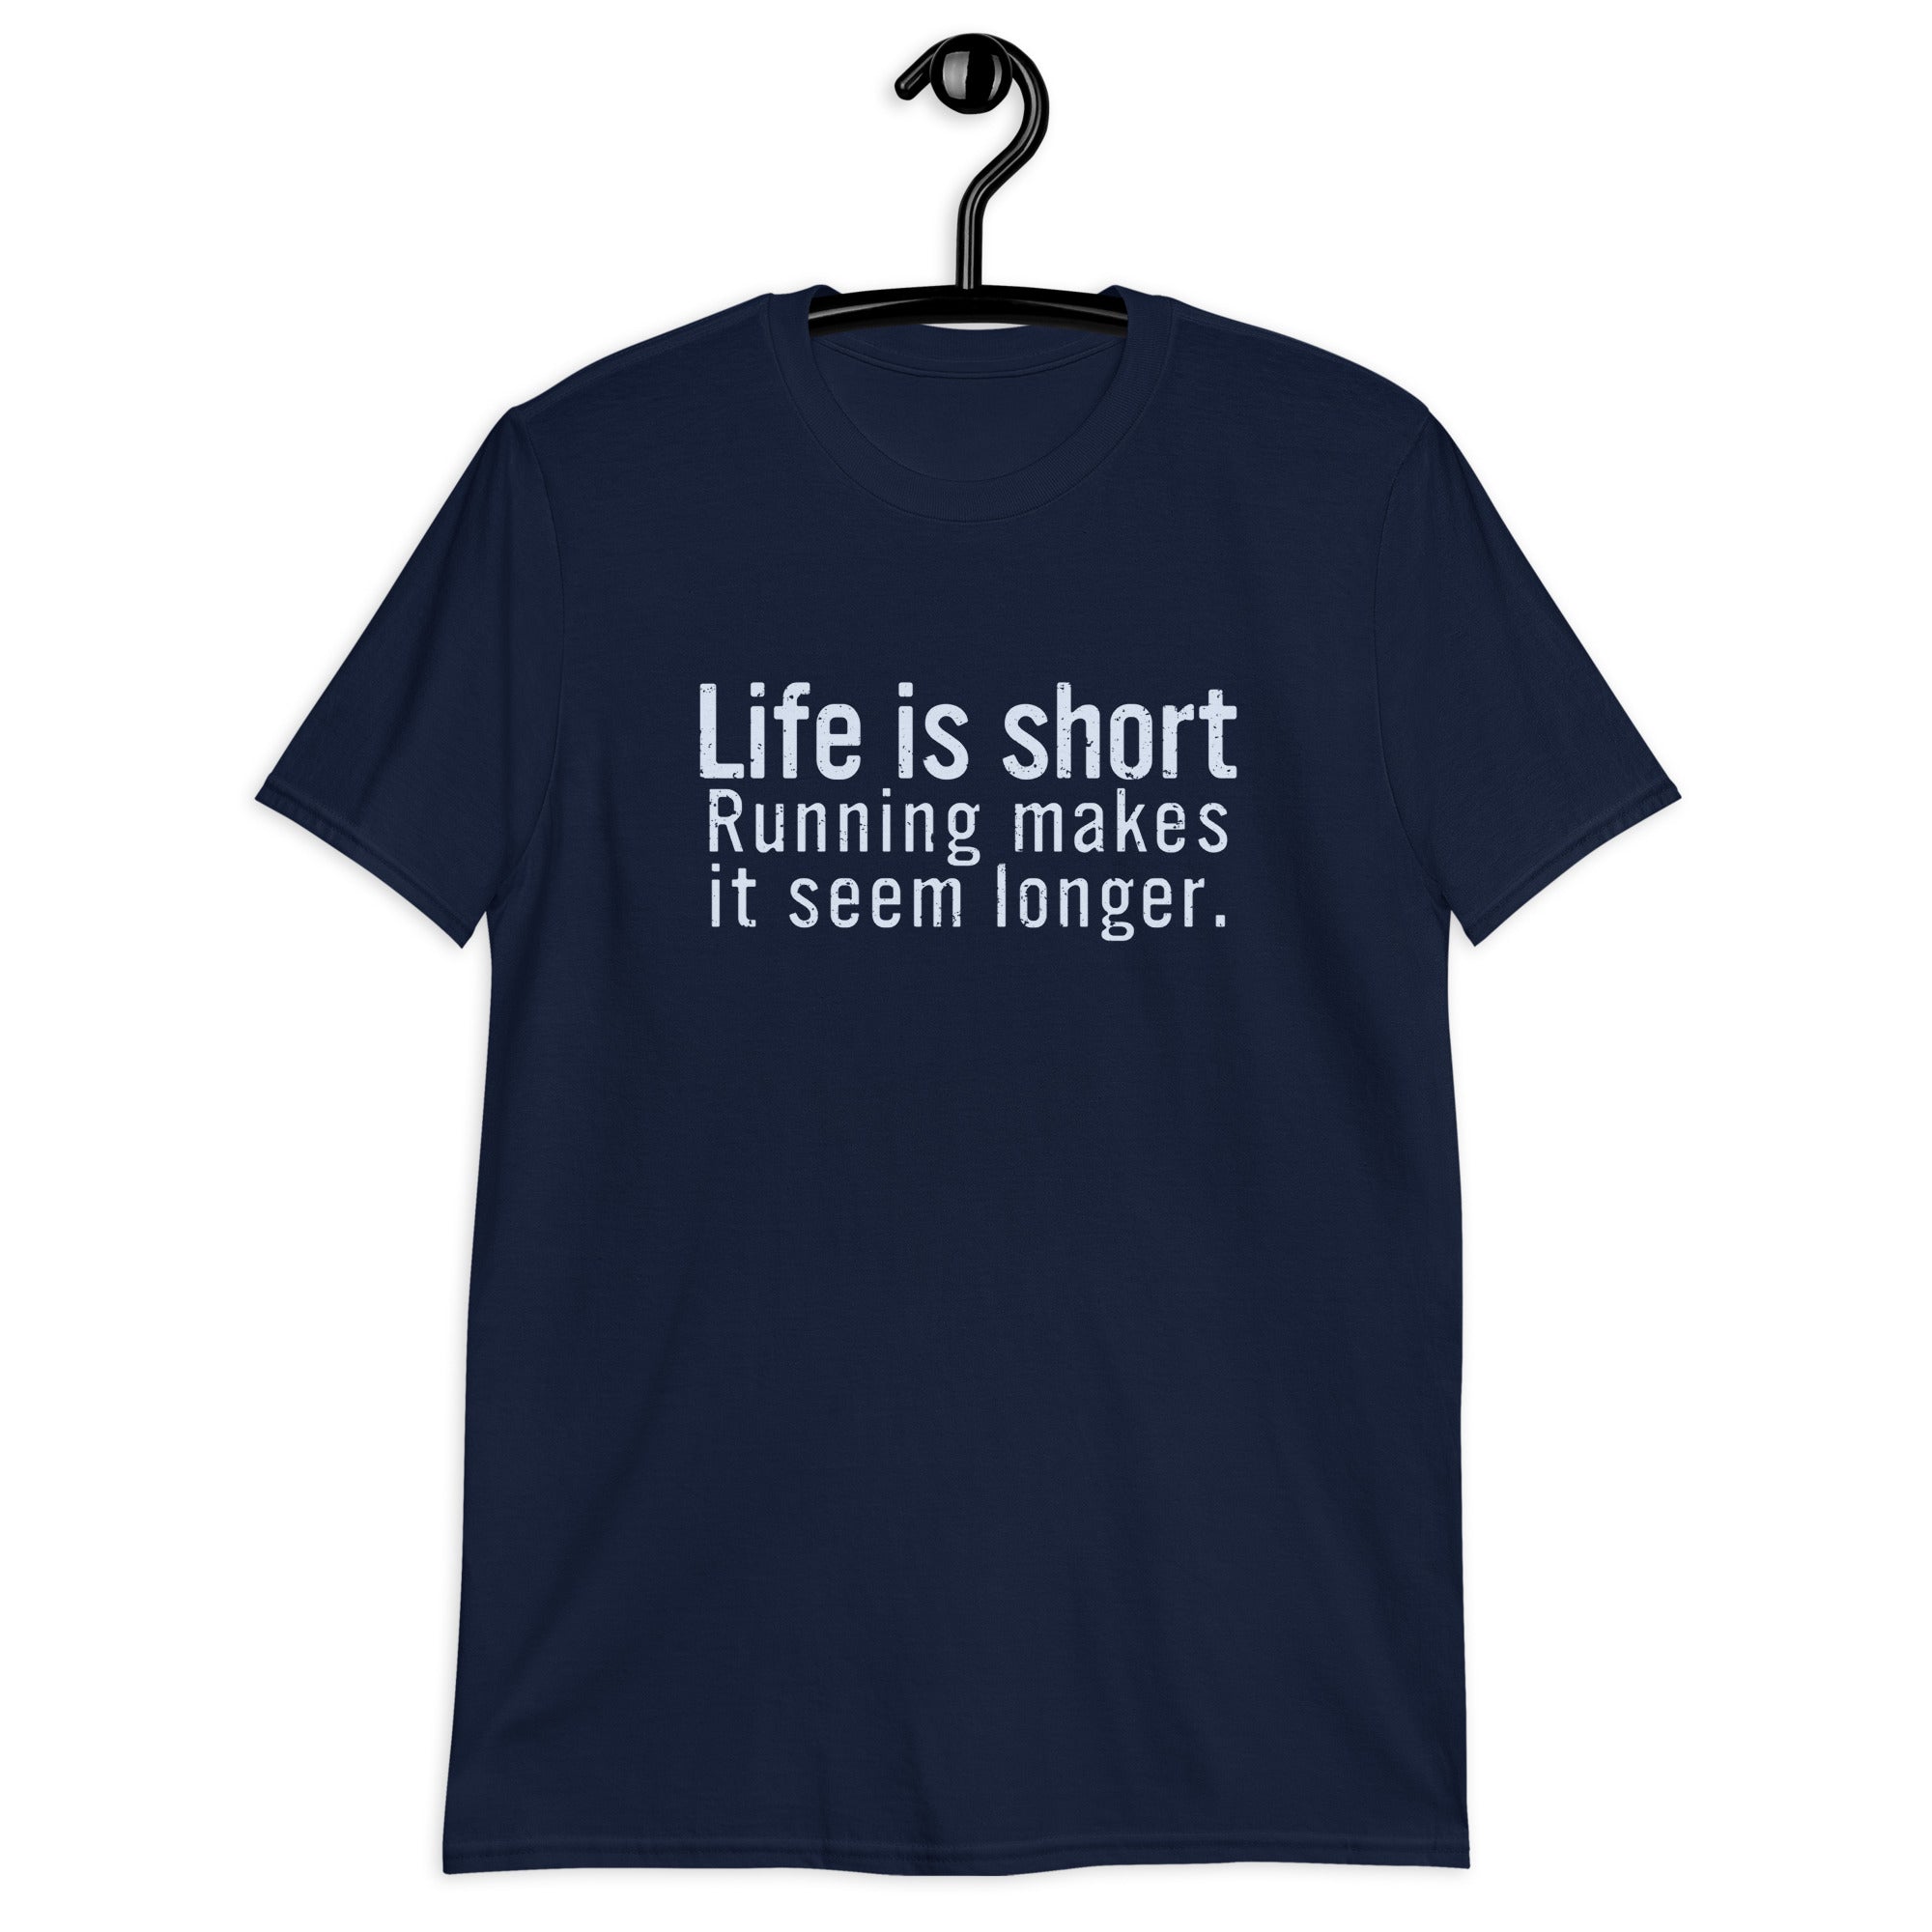 Life is short. Running makes it seem longer